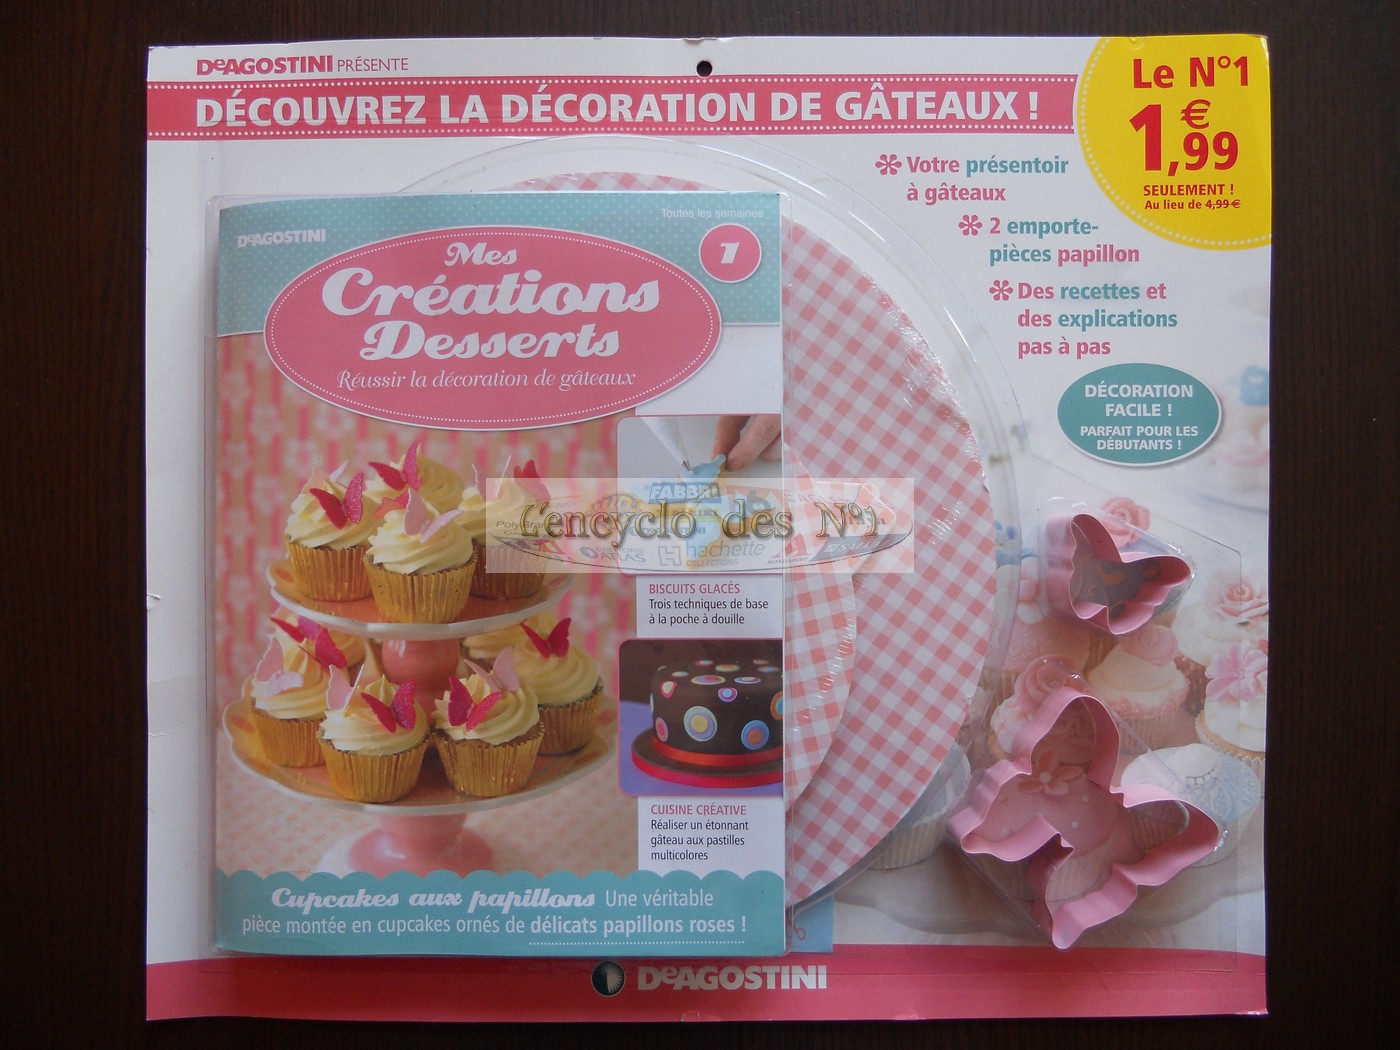 N° 1 Mes créations desserts - Test - DeAgostini - Mars 2012 Mod_html215849_4f68f345117ee